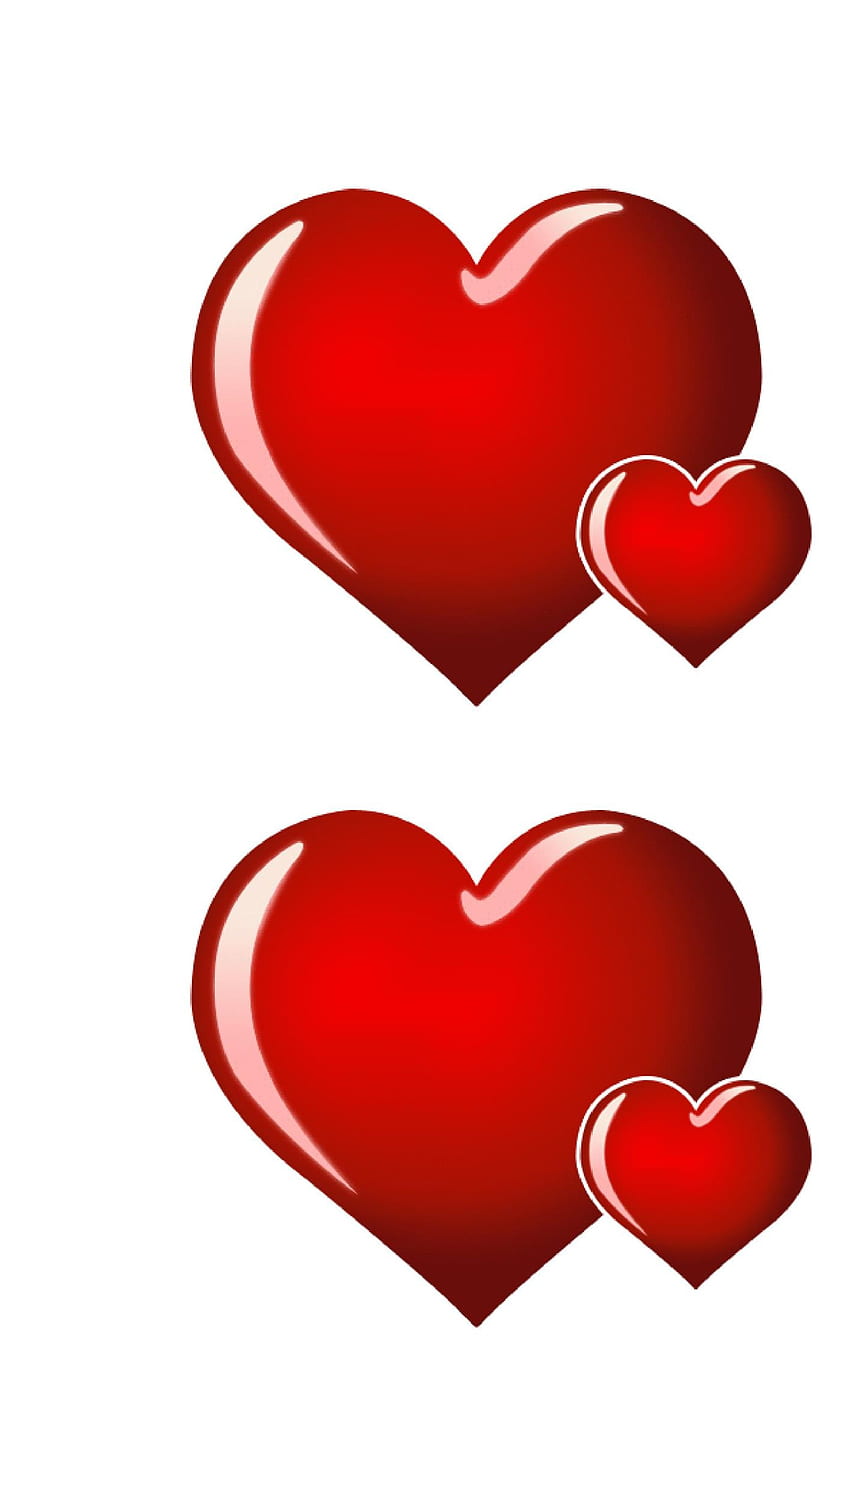 Forma do Coração, Coração, Coração Vermelho Papel de parede de celular HD